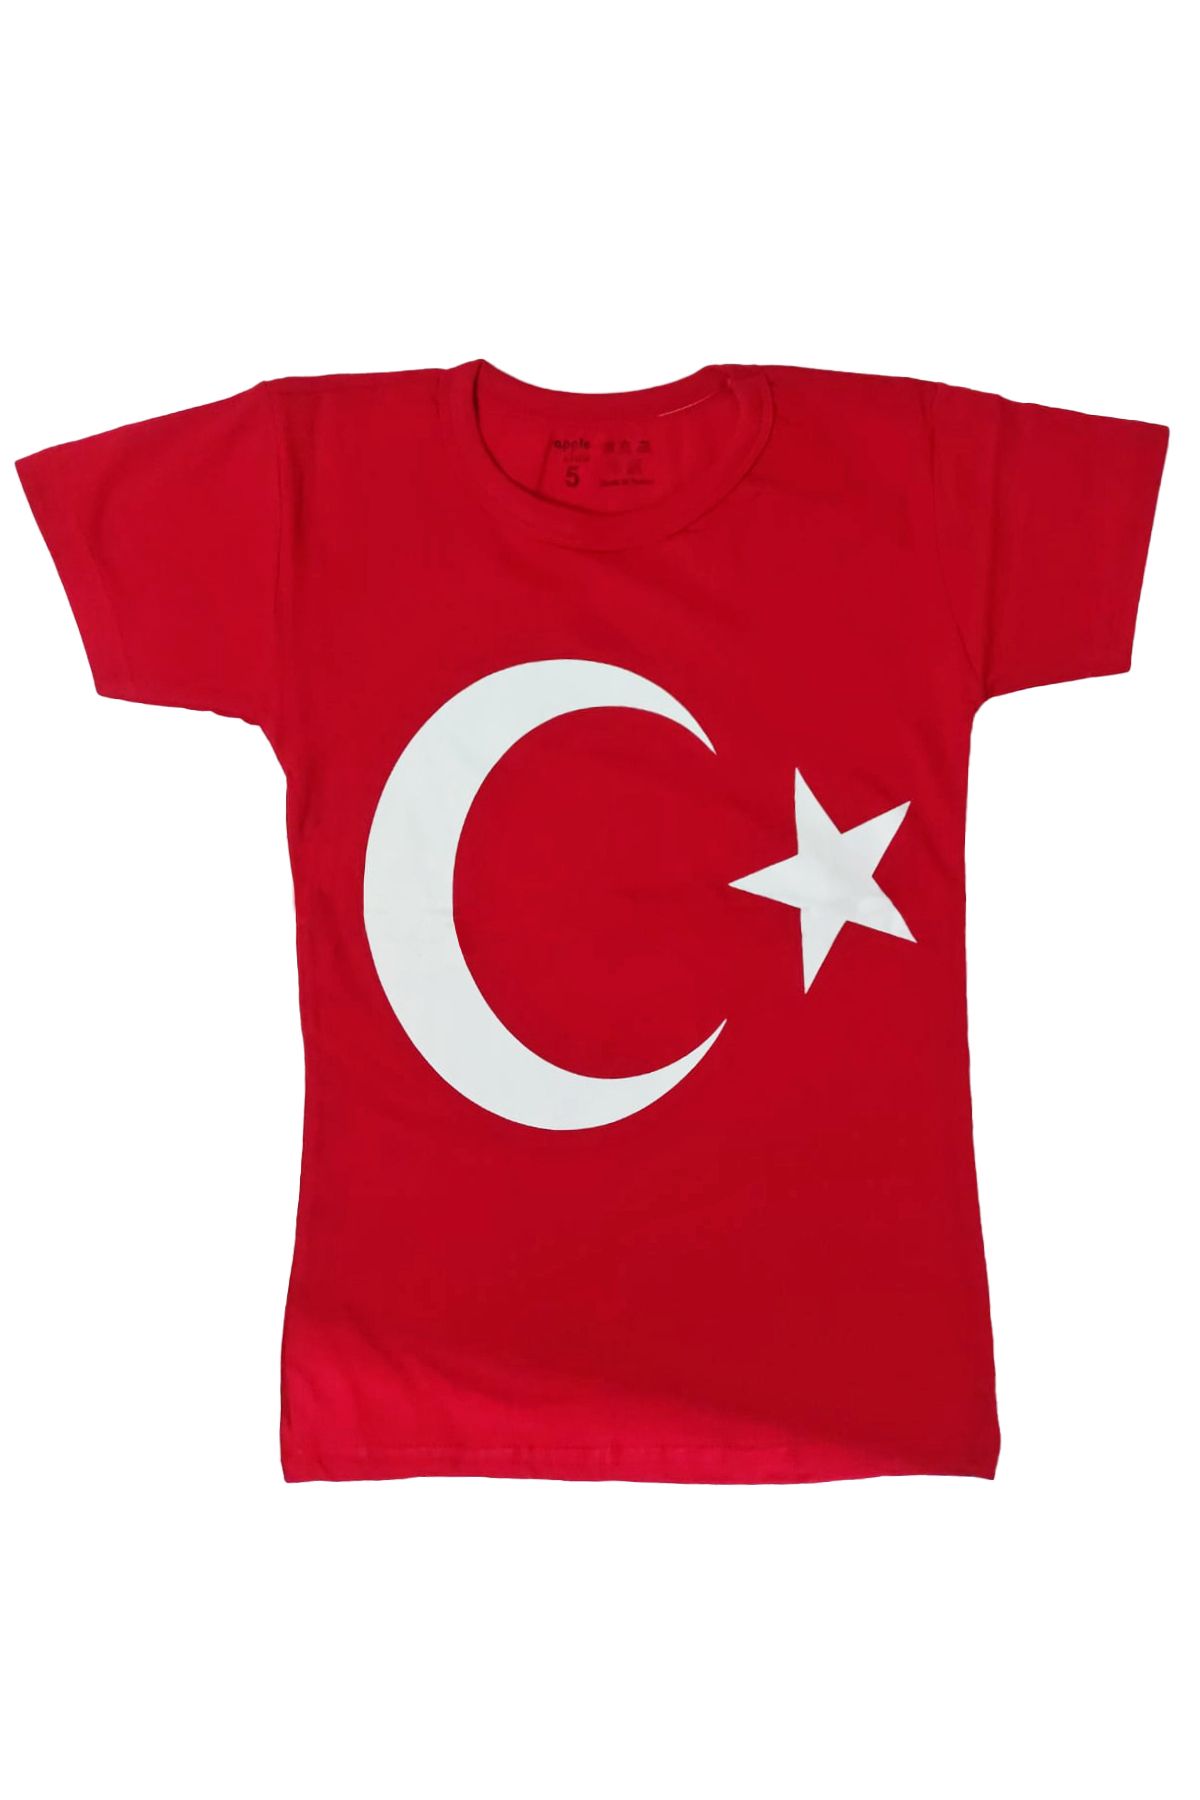 Limmy Türk Bayraklı Tişört Pamuklu Kırmızı Ay Yıldız Çocuk Tshirt- 4 Yaş